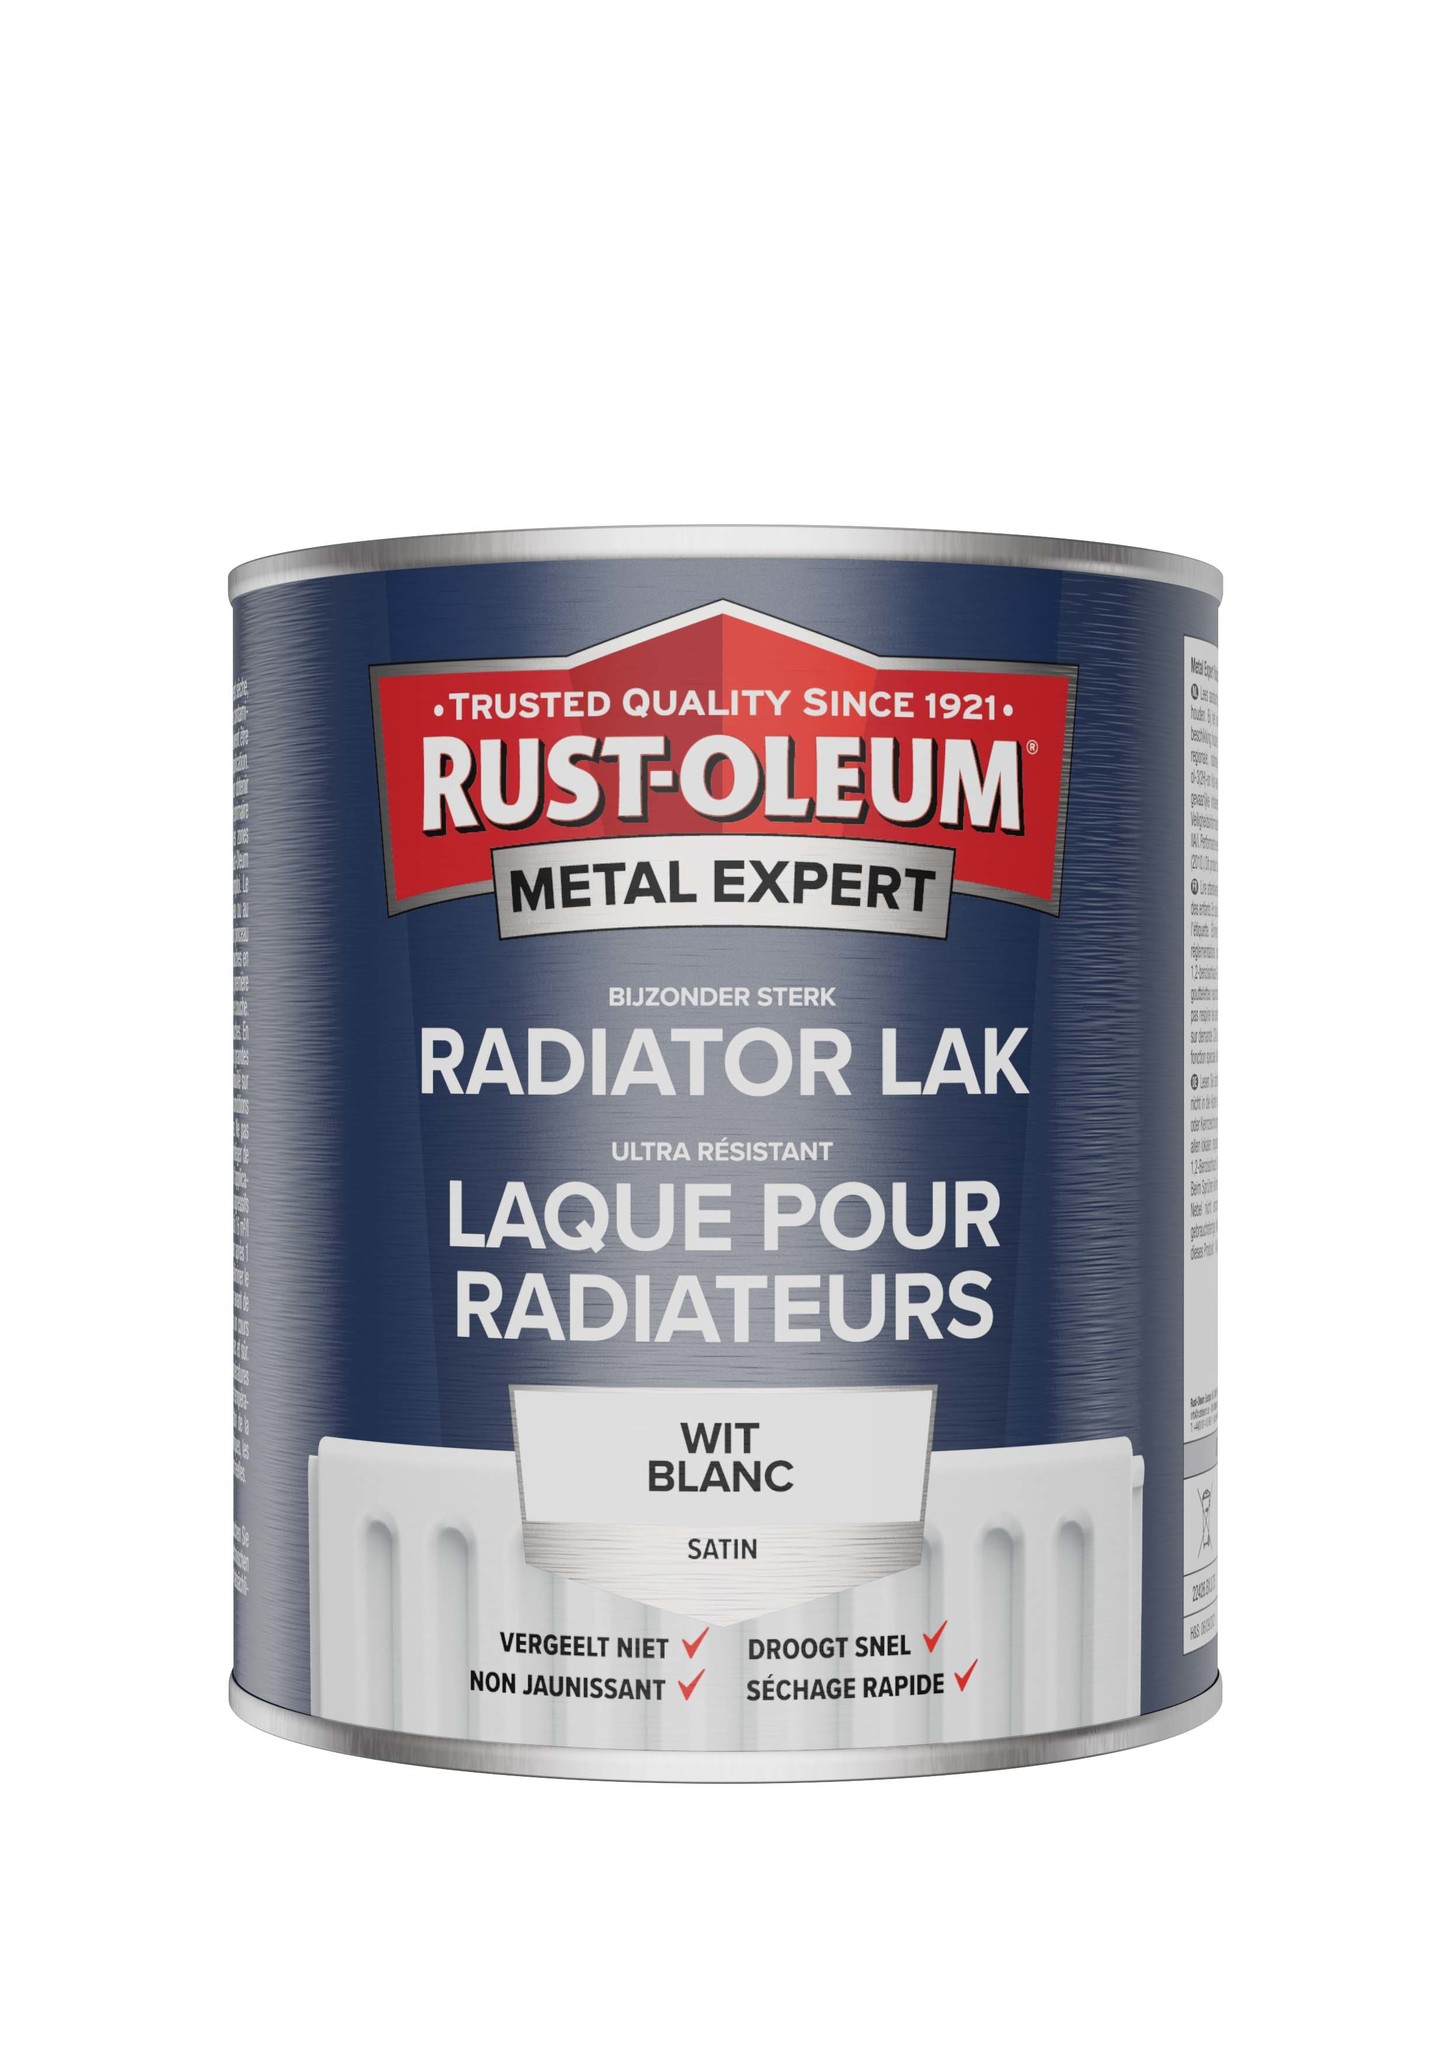 rust-oleum metal expert radiator lak satin wit 0.75 ltr